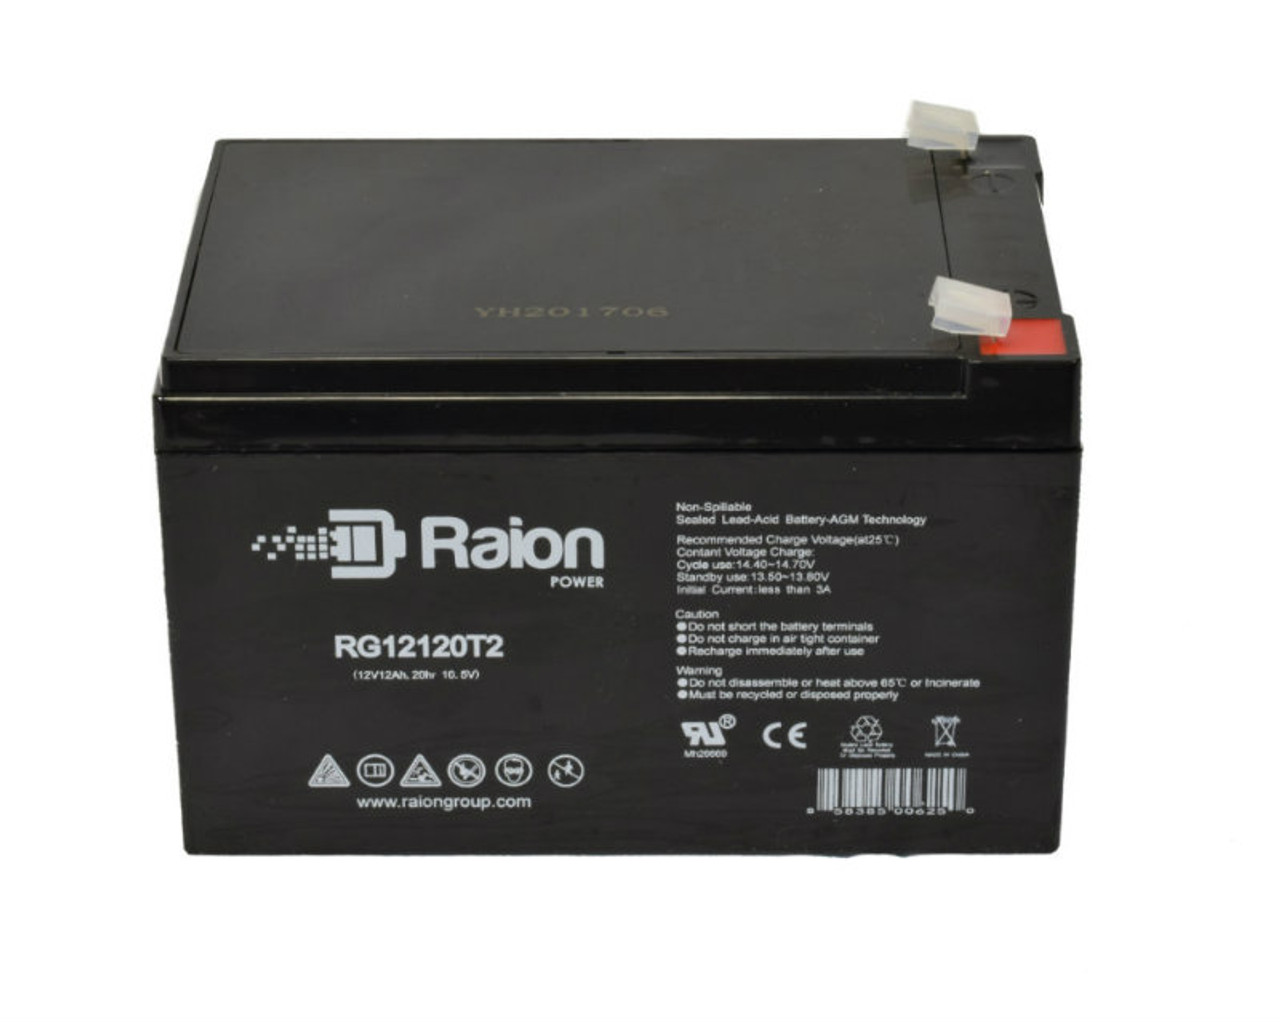 Raion Power RG12120T2 Replacement Battery Cartridge for APC Smart-UPS 1000VA SU1000NET